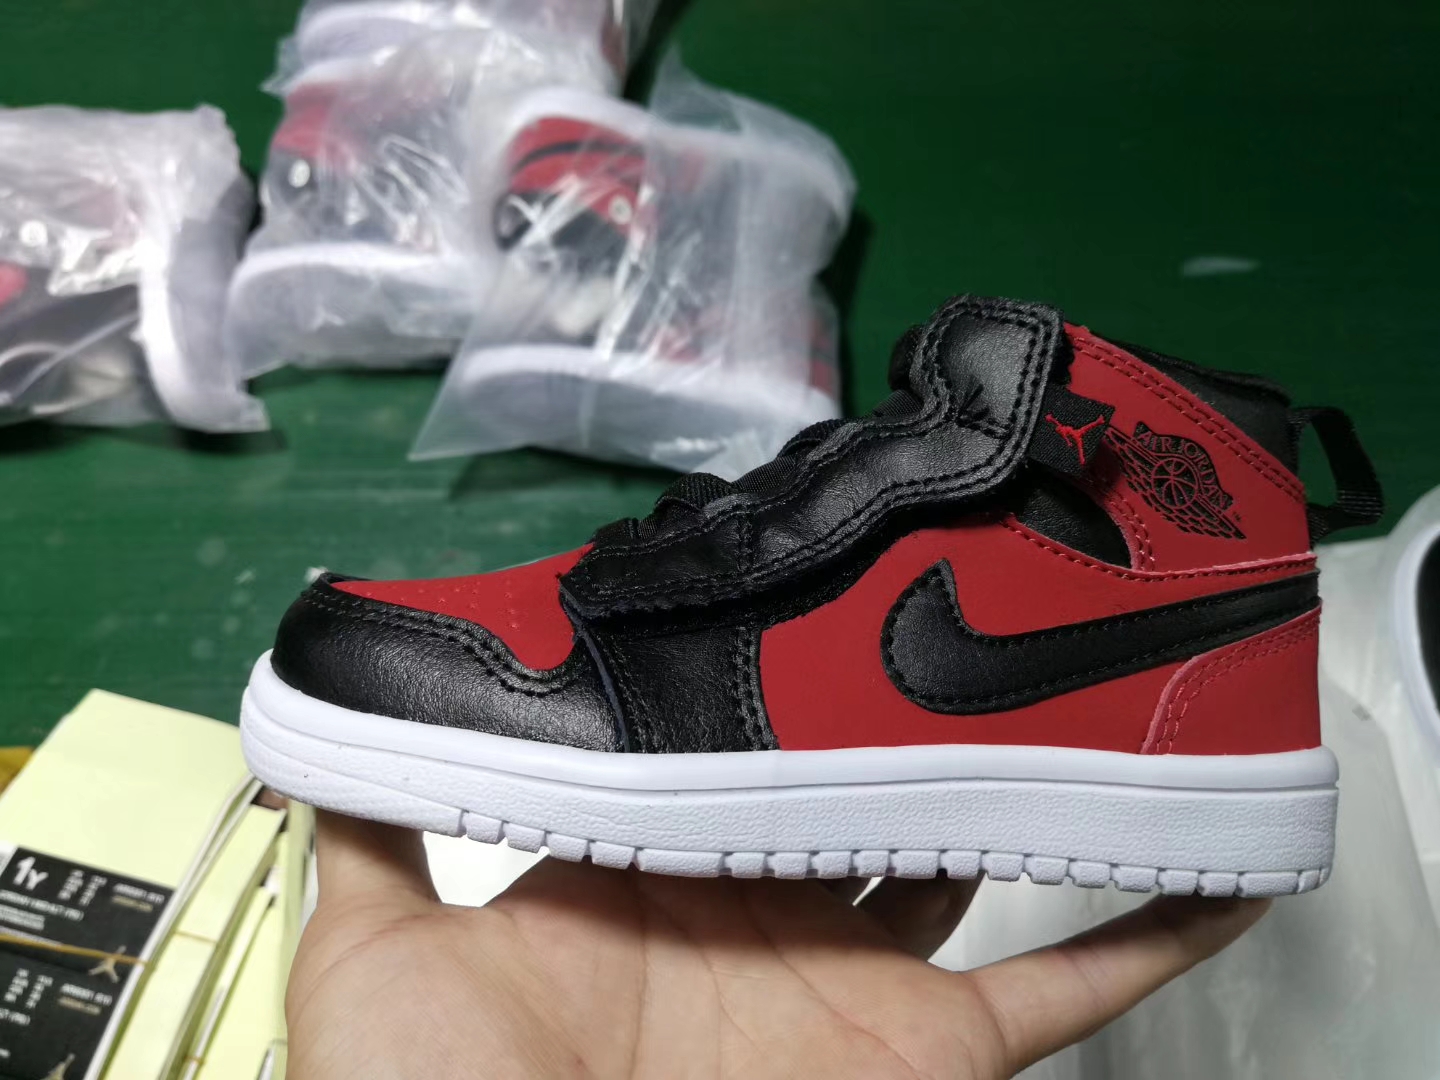 New Kids Air Jordan 1 Black Red Shoes - Click Image to Close